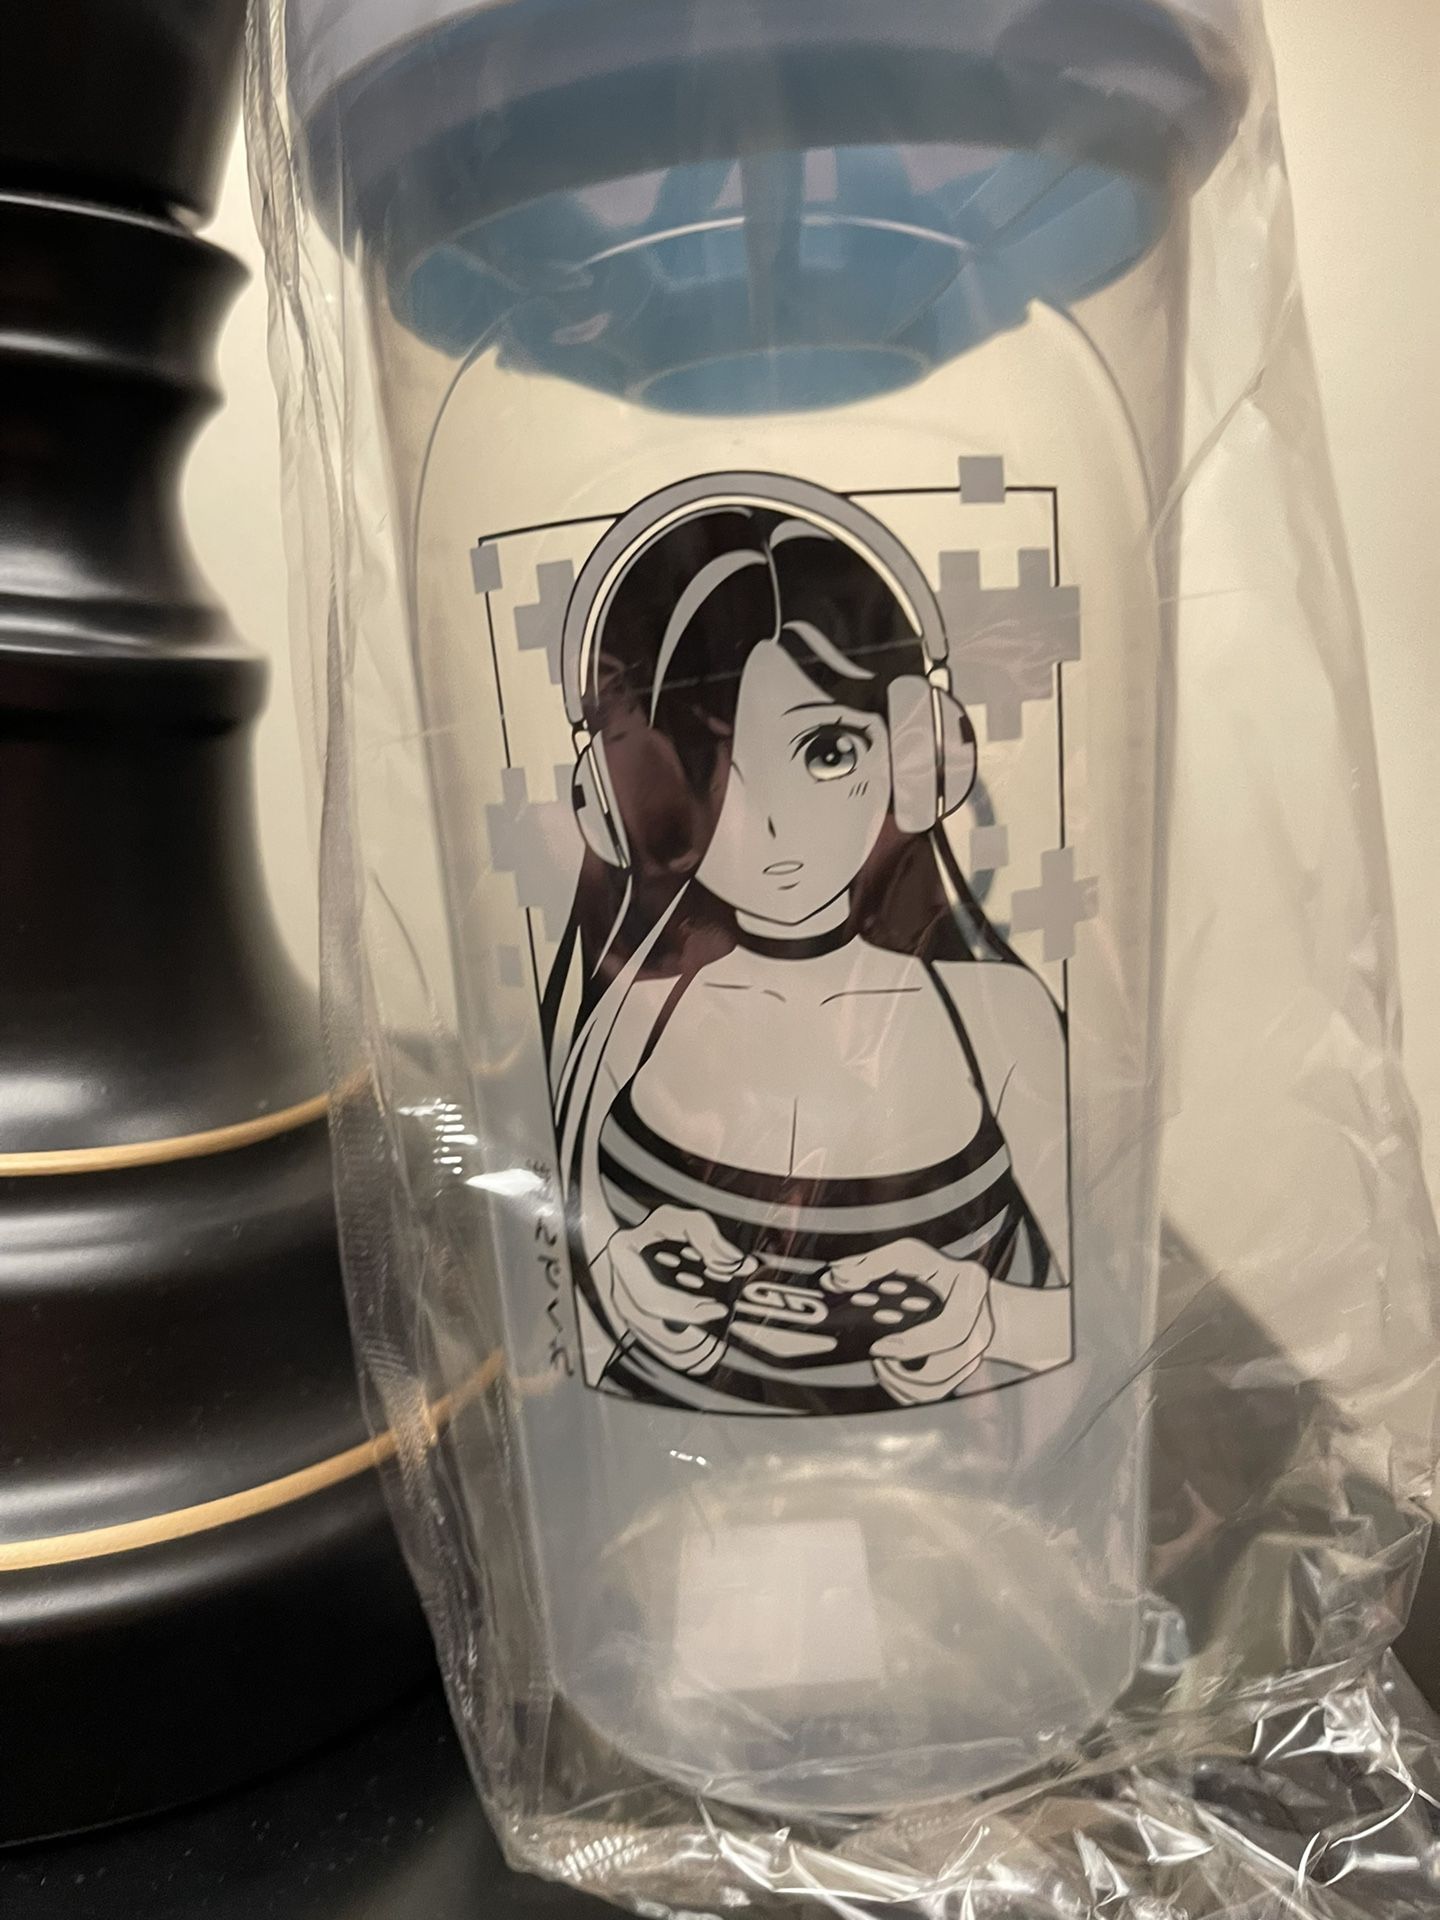 Anime waifu shaker bottles